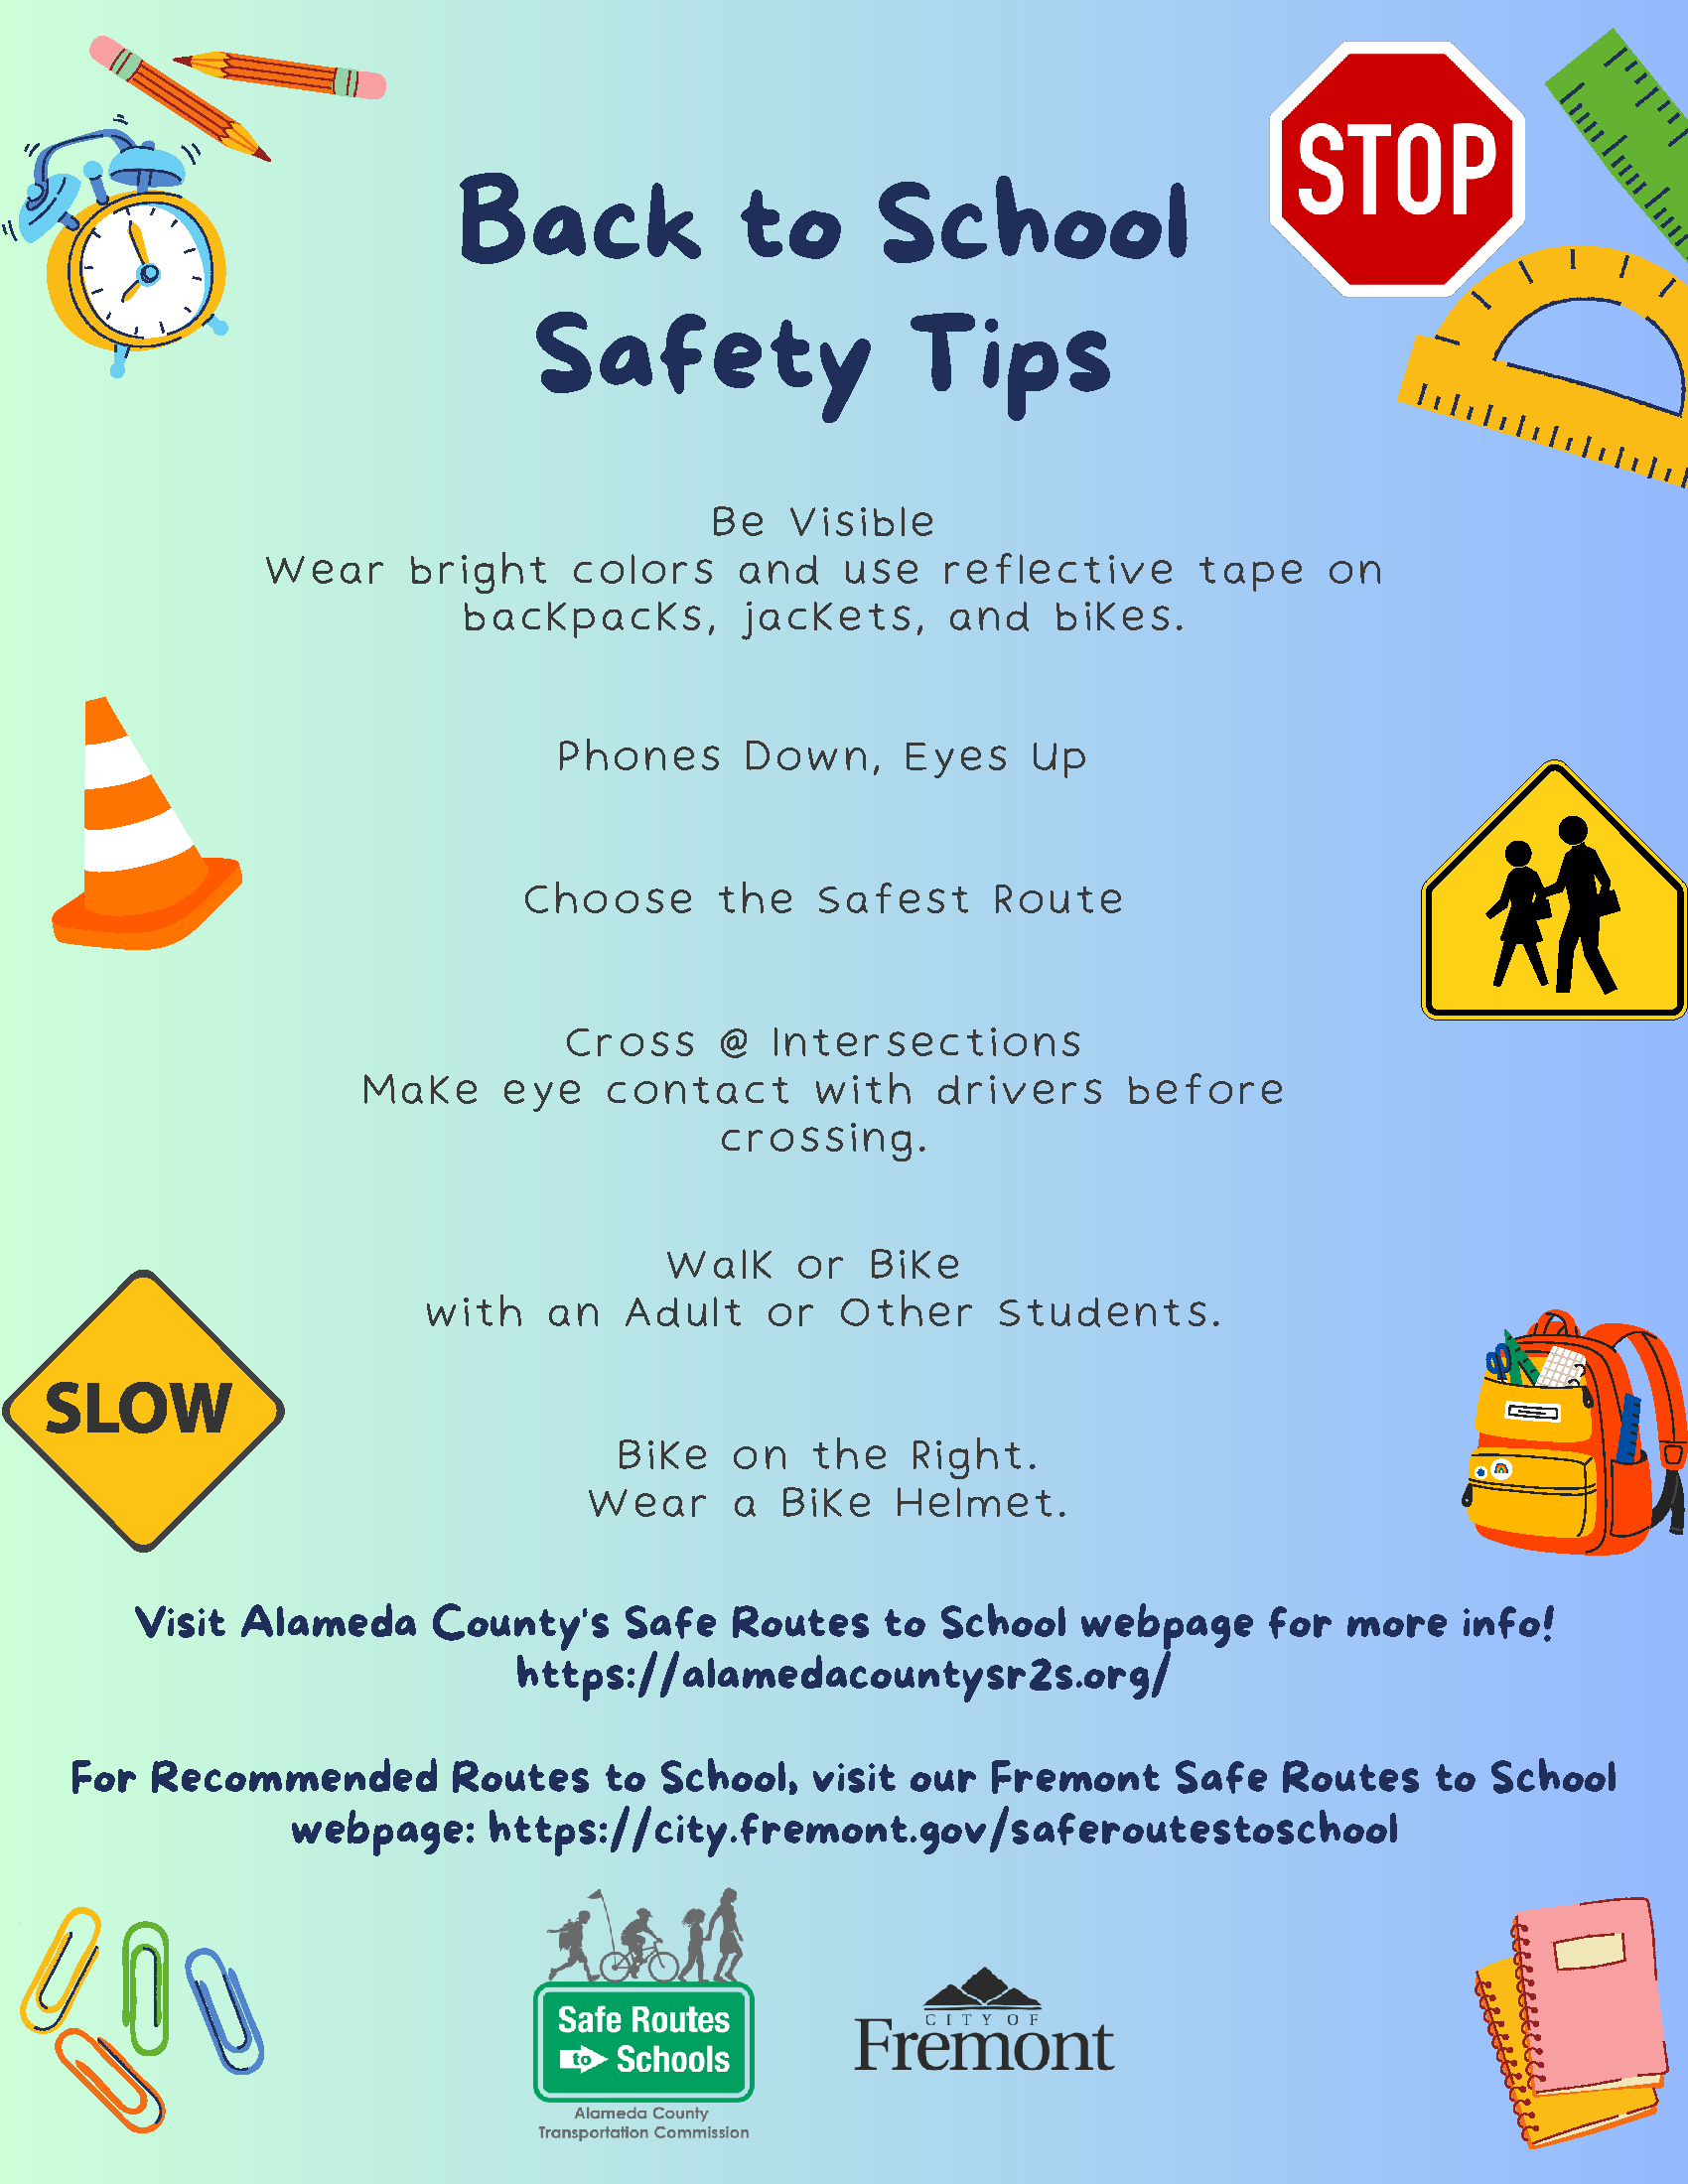 City of Fremont Back to School Safety Tips - Mission San Jose